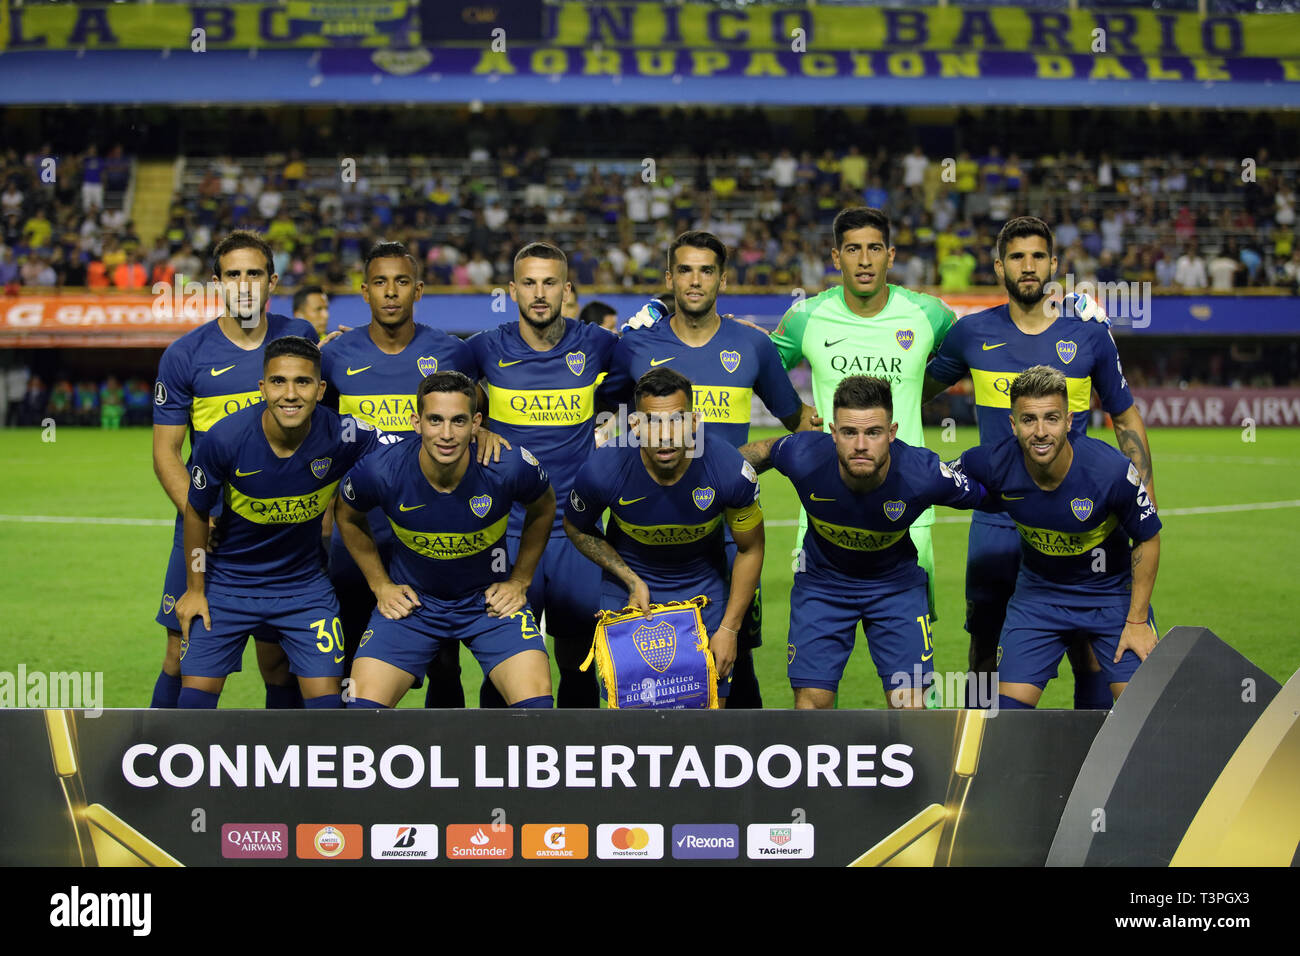 Buenos Aires, Argentina - April 10, 2019: Boca Juniors team formation against Wilstermann in the bombonera in Buenos Aires, Argentina Stock Photo